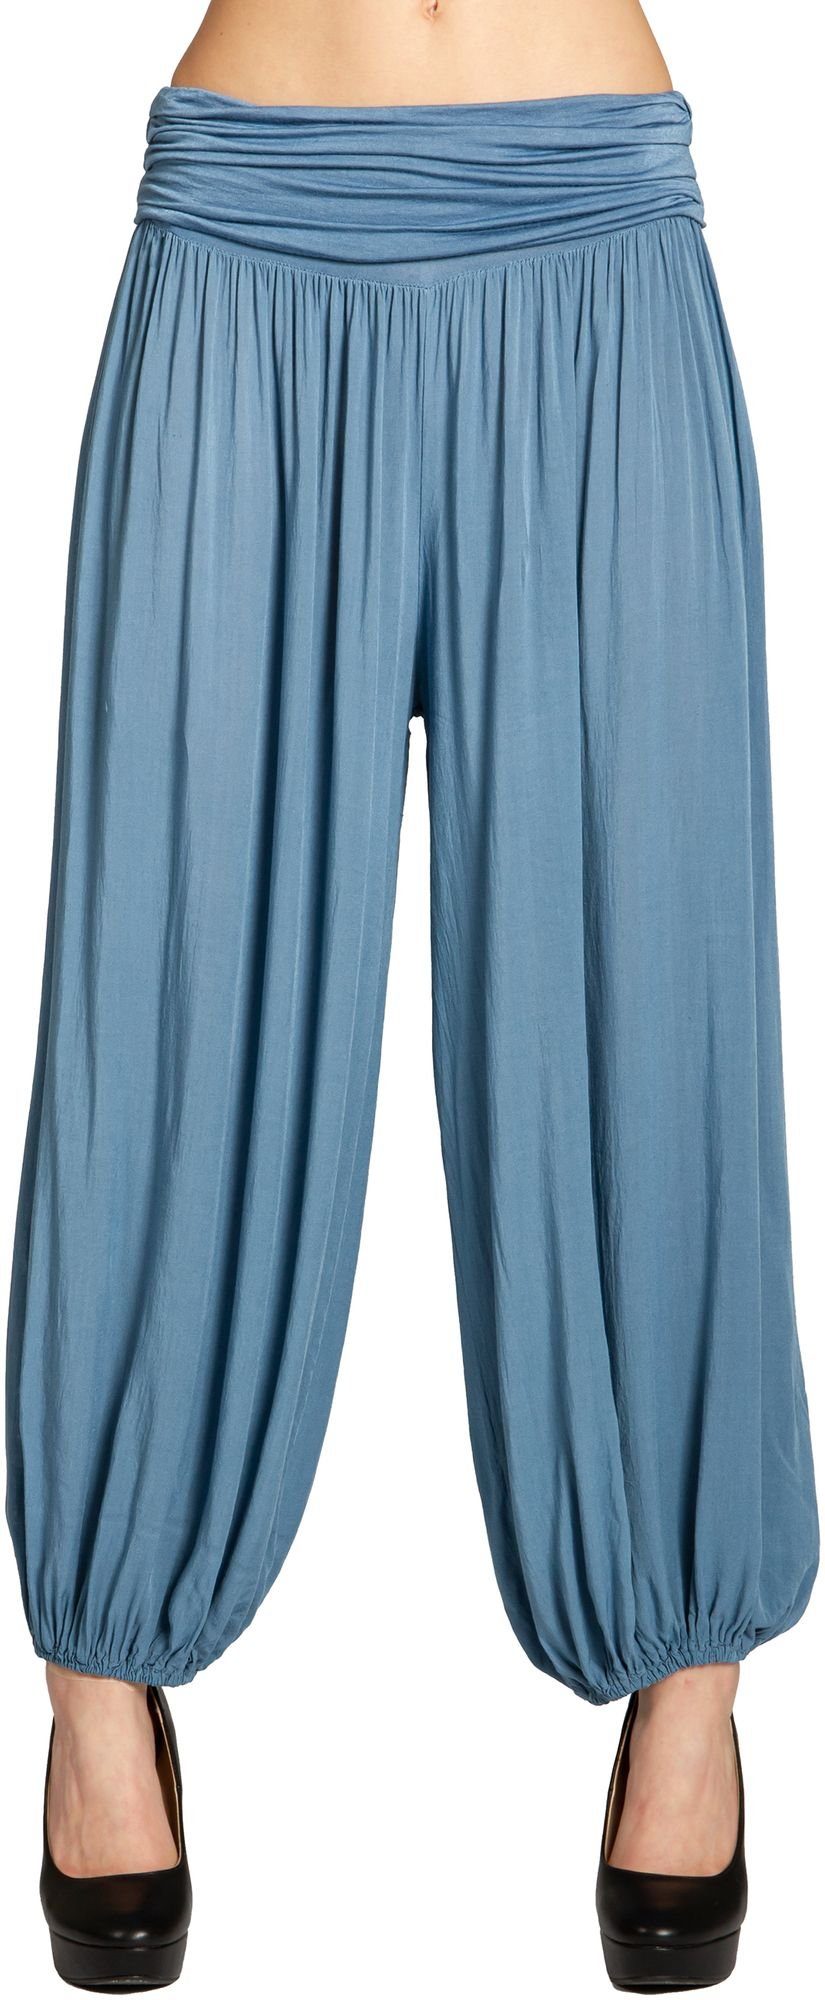 Caspar Stoffhose KHS035 leichte Damen Sommer Haremshose jeans blau